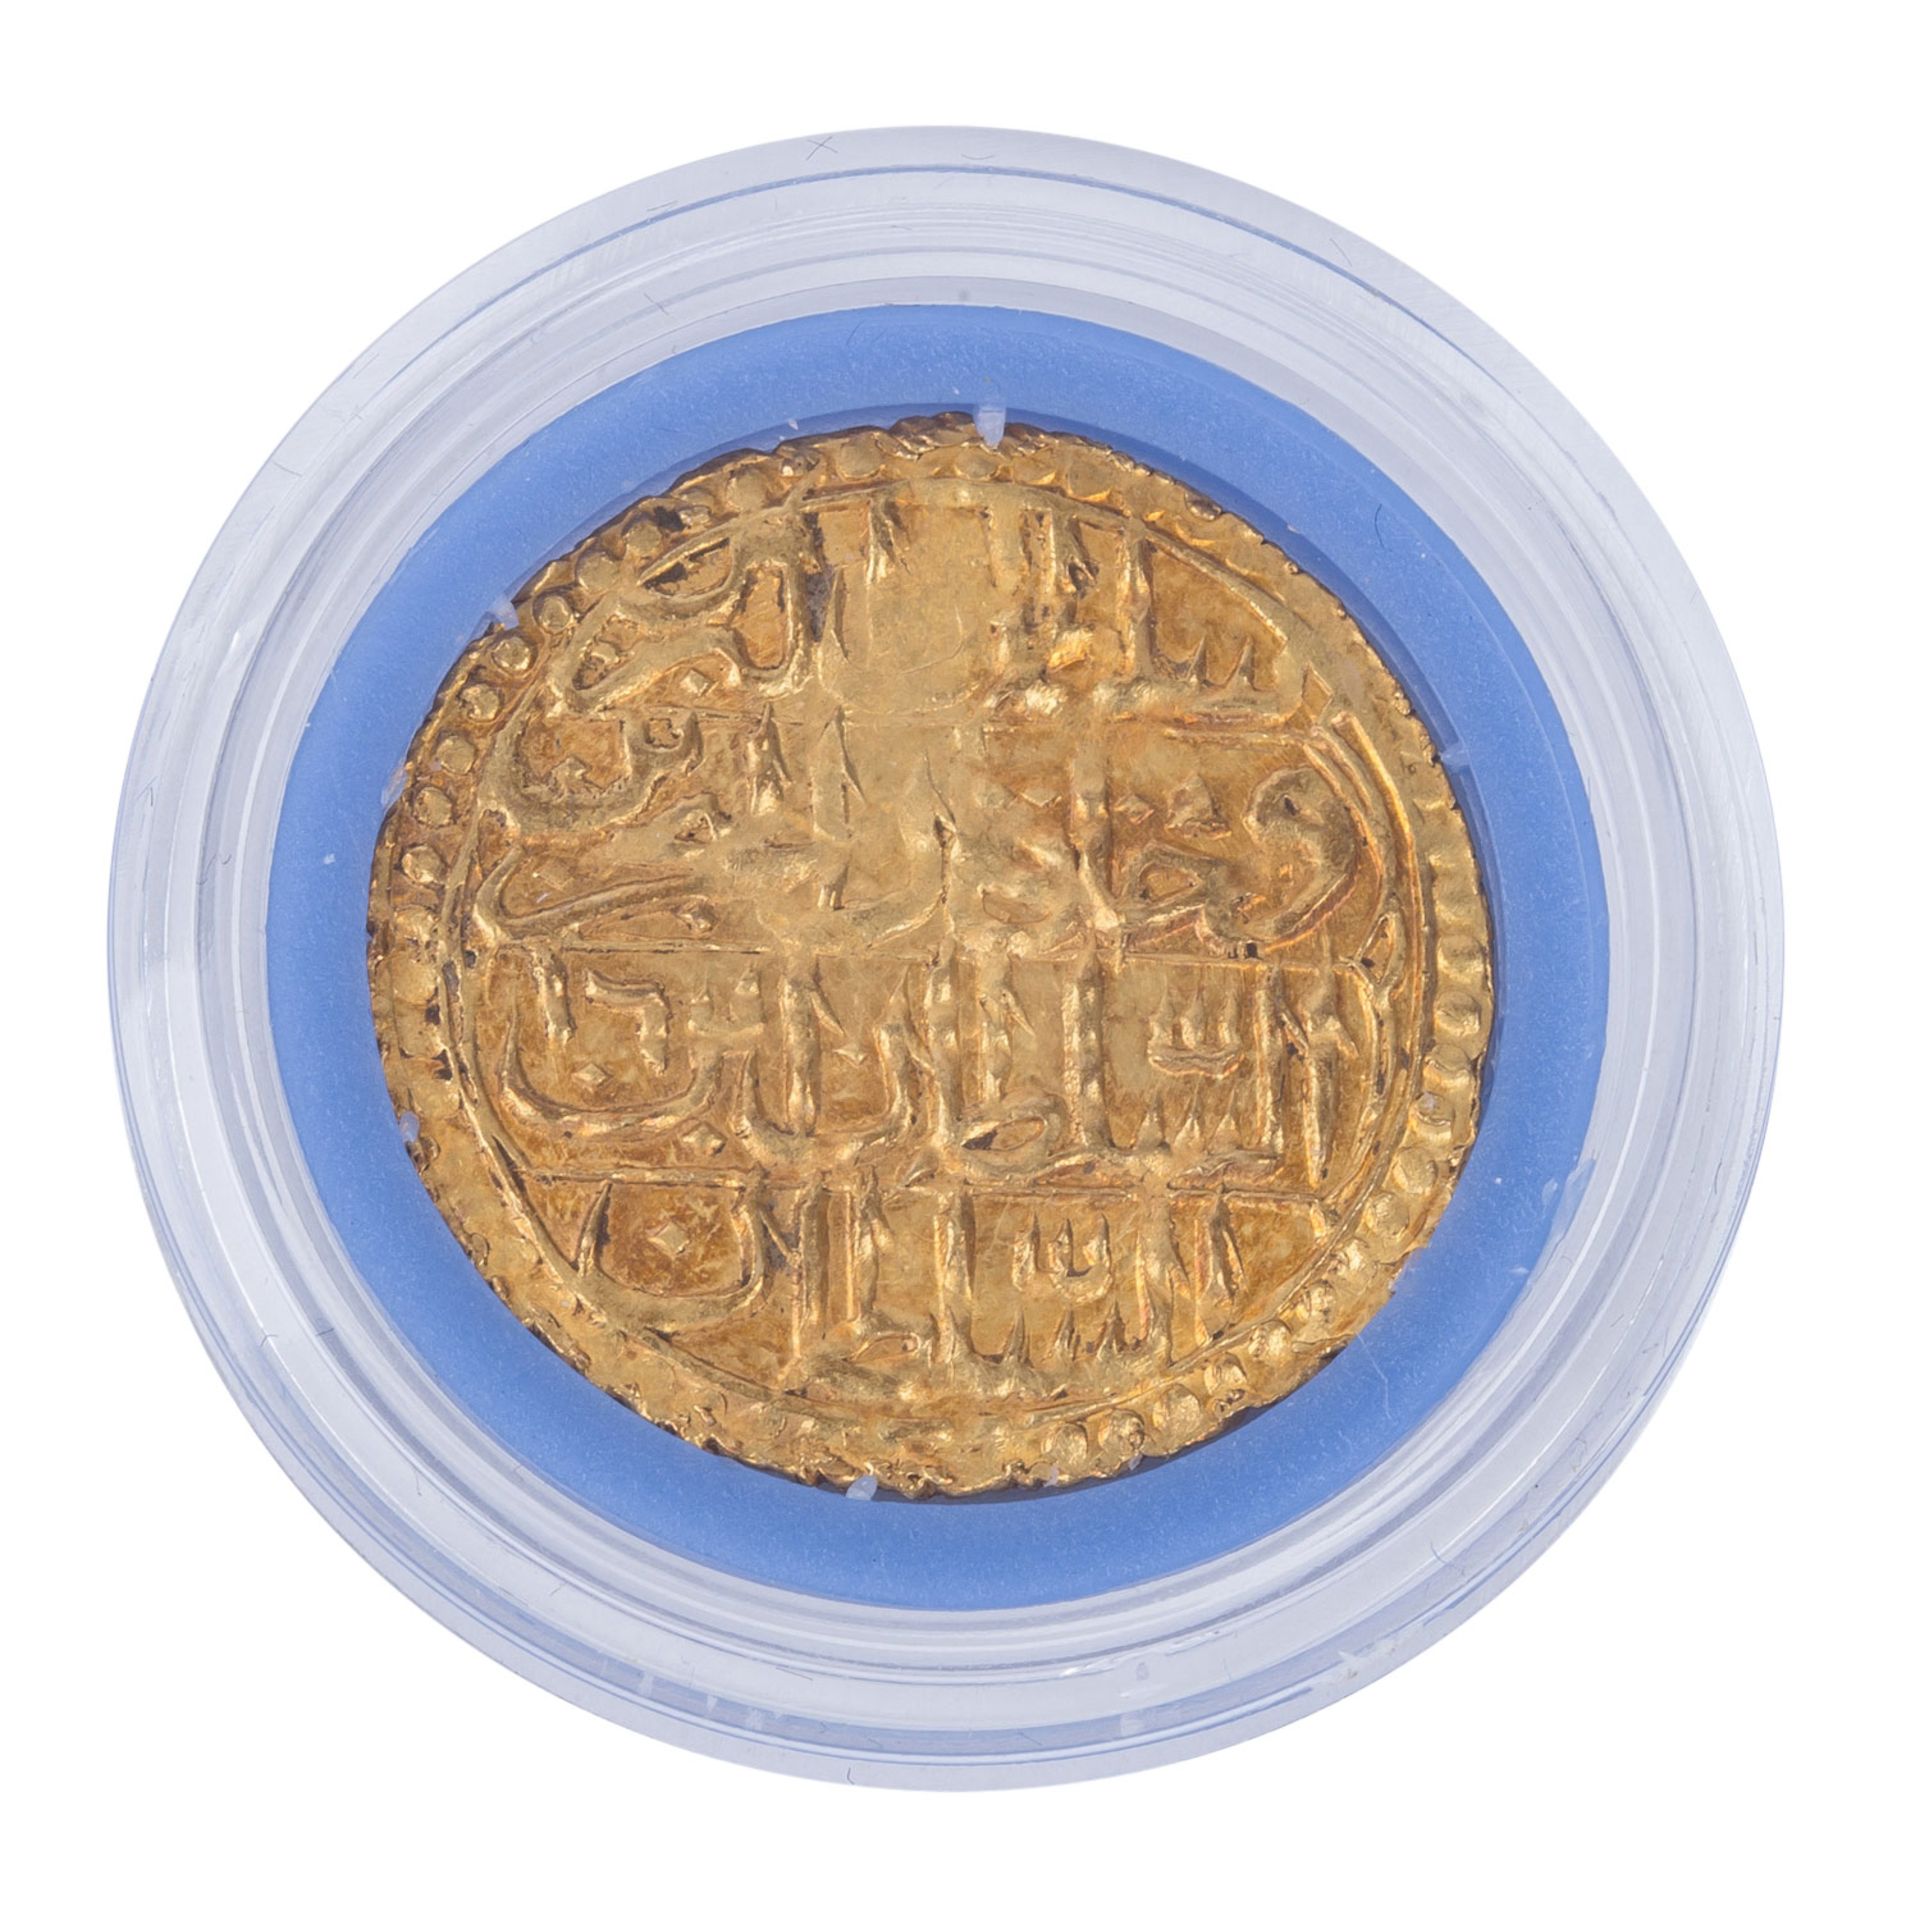 Türkei - Osmanisches Reich /GOLD - Selim III. (1789-1807/1203-1222AH), Zeri Mahbub - Image 2 of 2